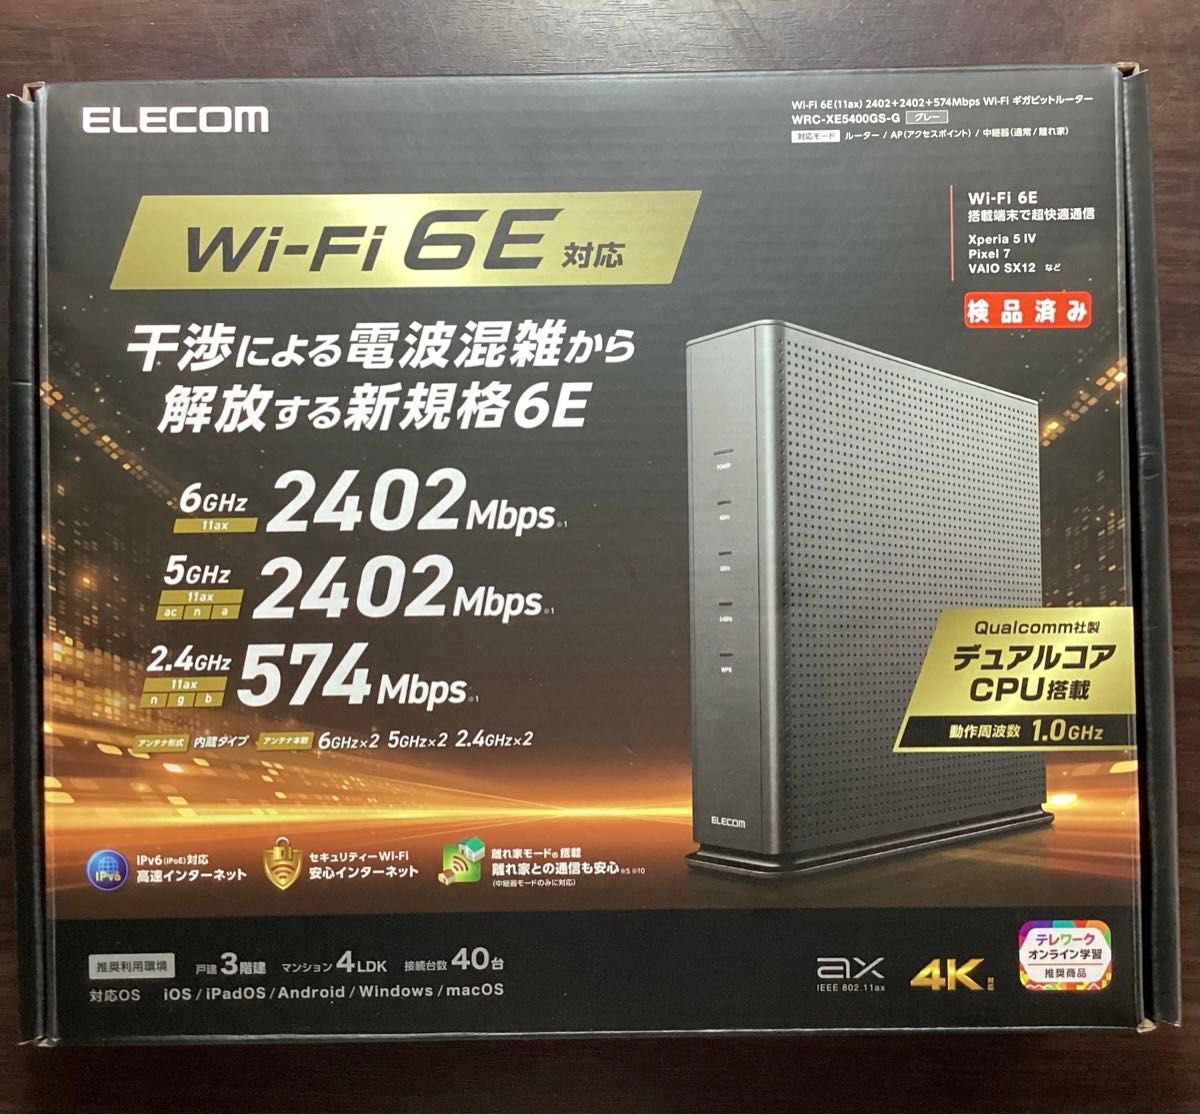 Wi-Fi 6E(11ax) 2402+2402+574Mbps Wi-Fi ギガビットルーター/中古/動作済み